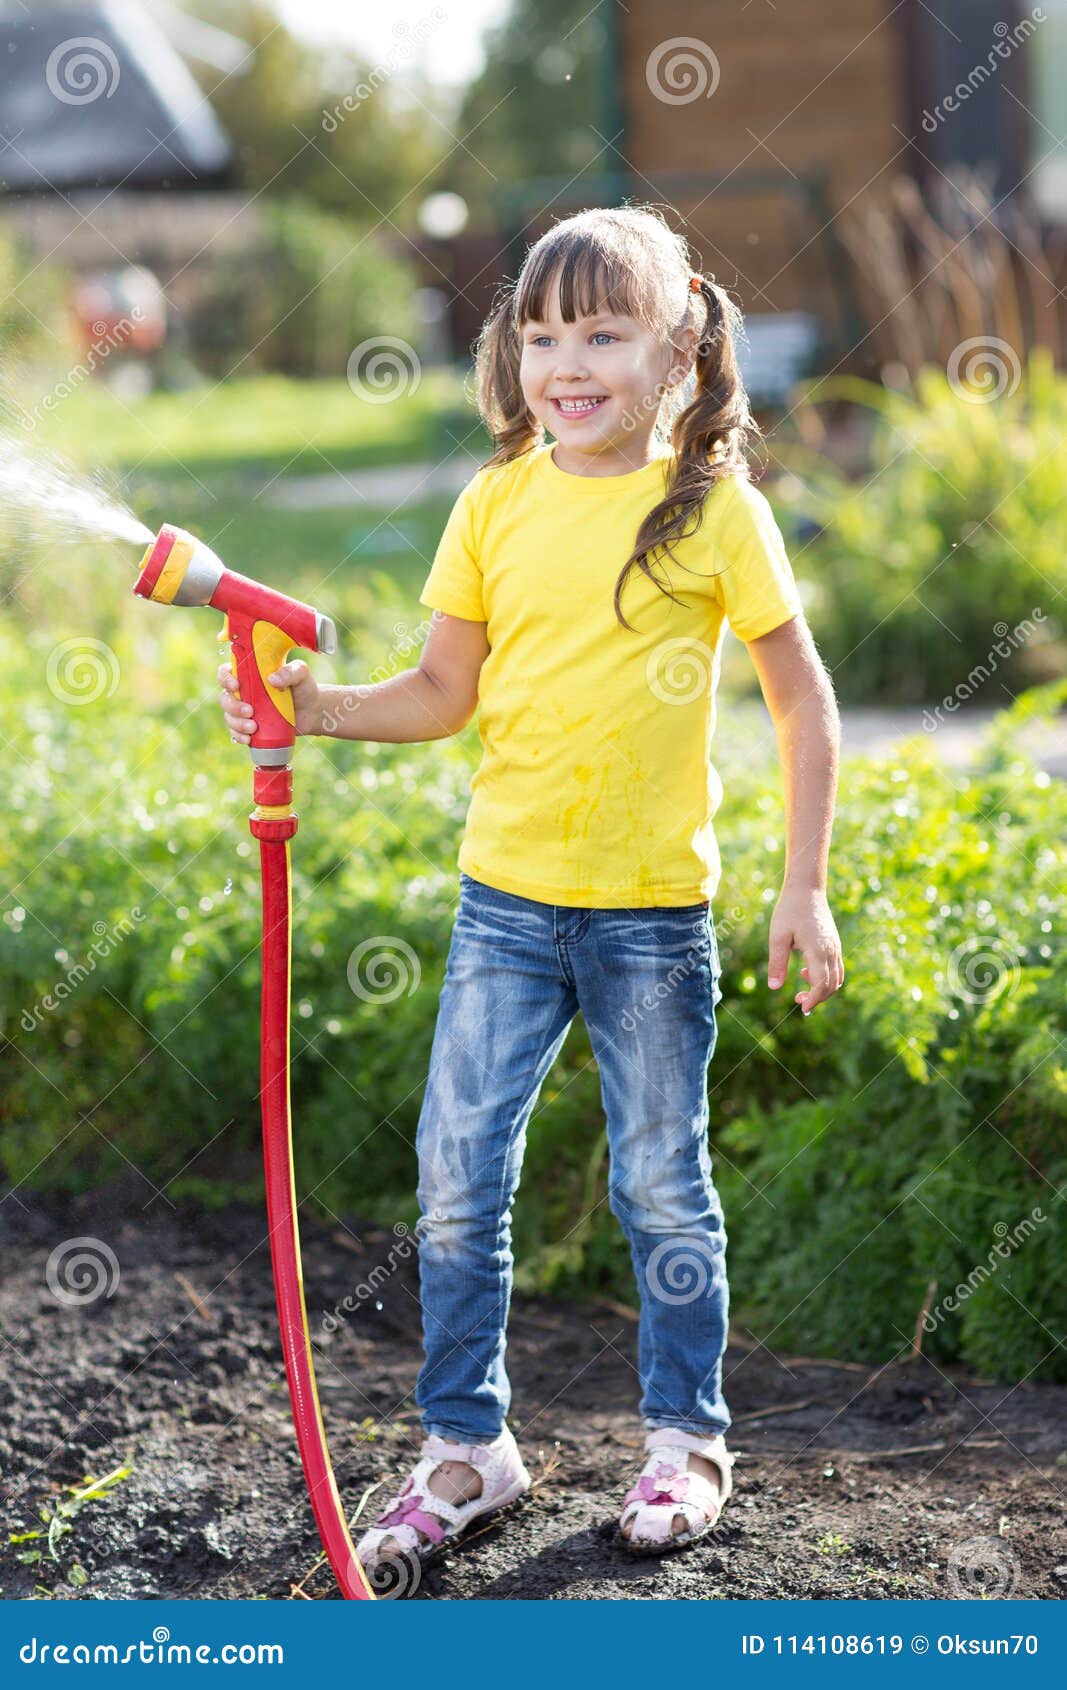 little gardener girl watering with hosepipe